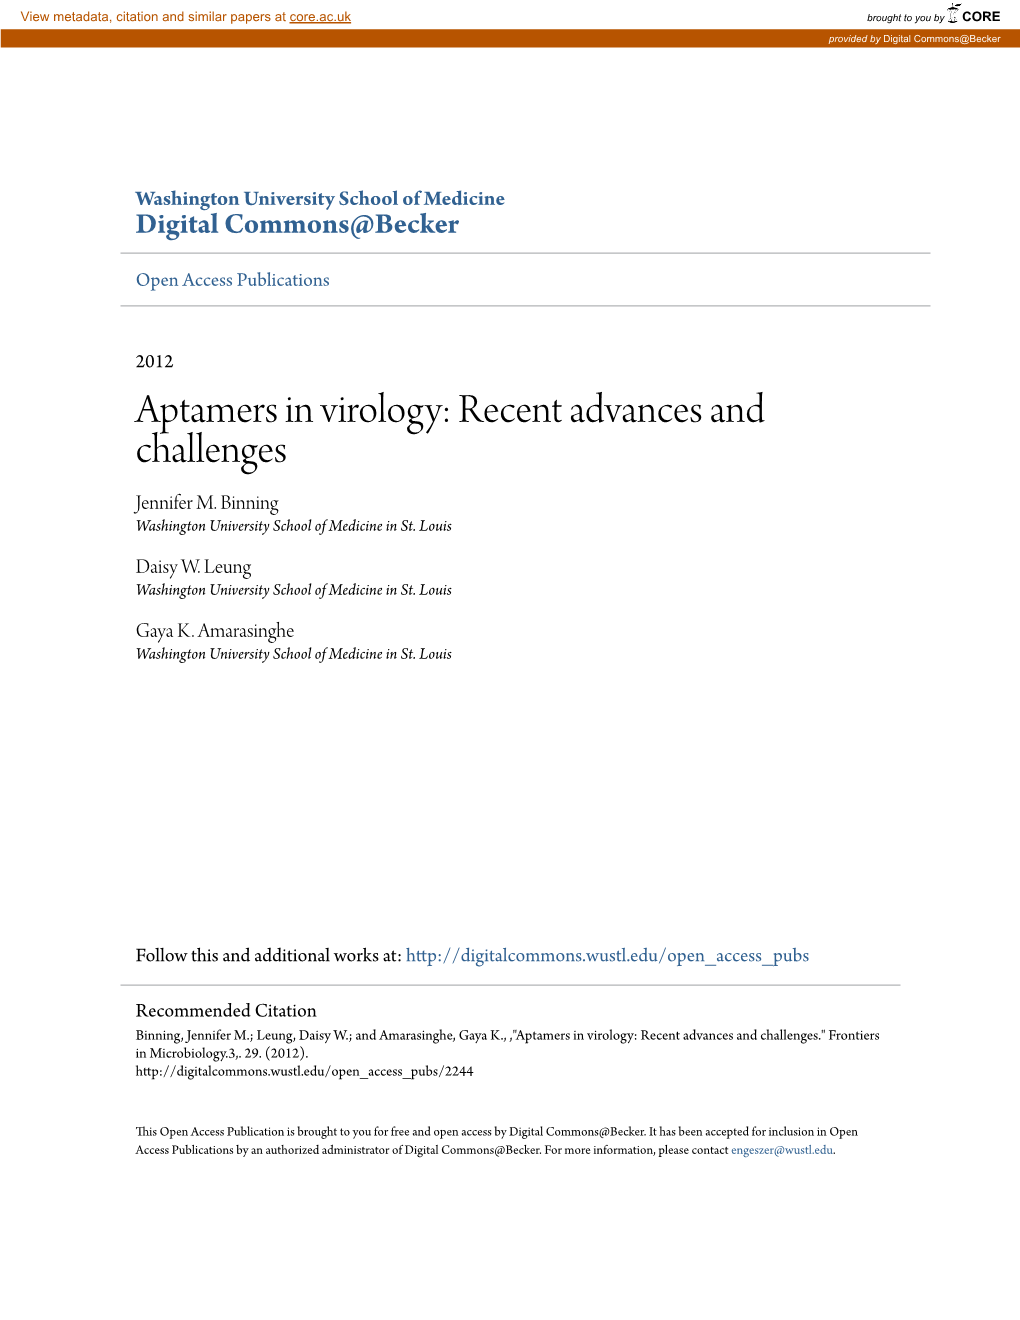 Aptamers in Virology: Recent Advances and Challenges Jennifer M